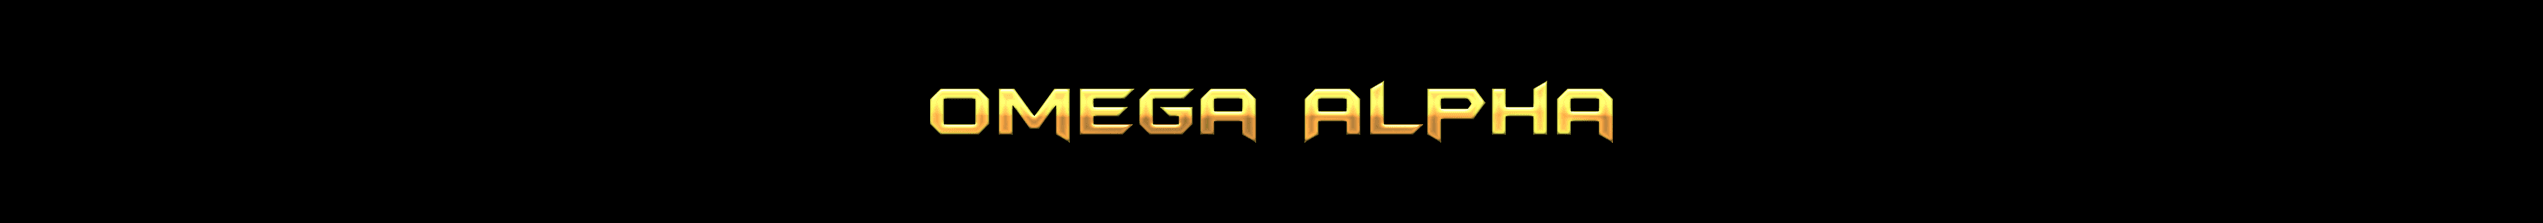 Omega-Alpha-Project-Wallet バナー